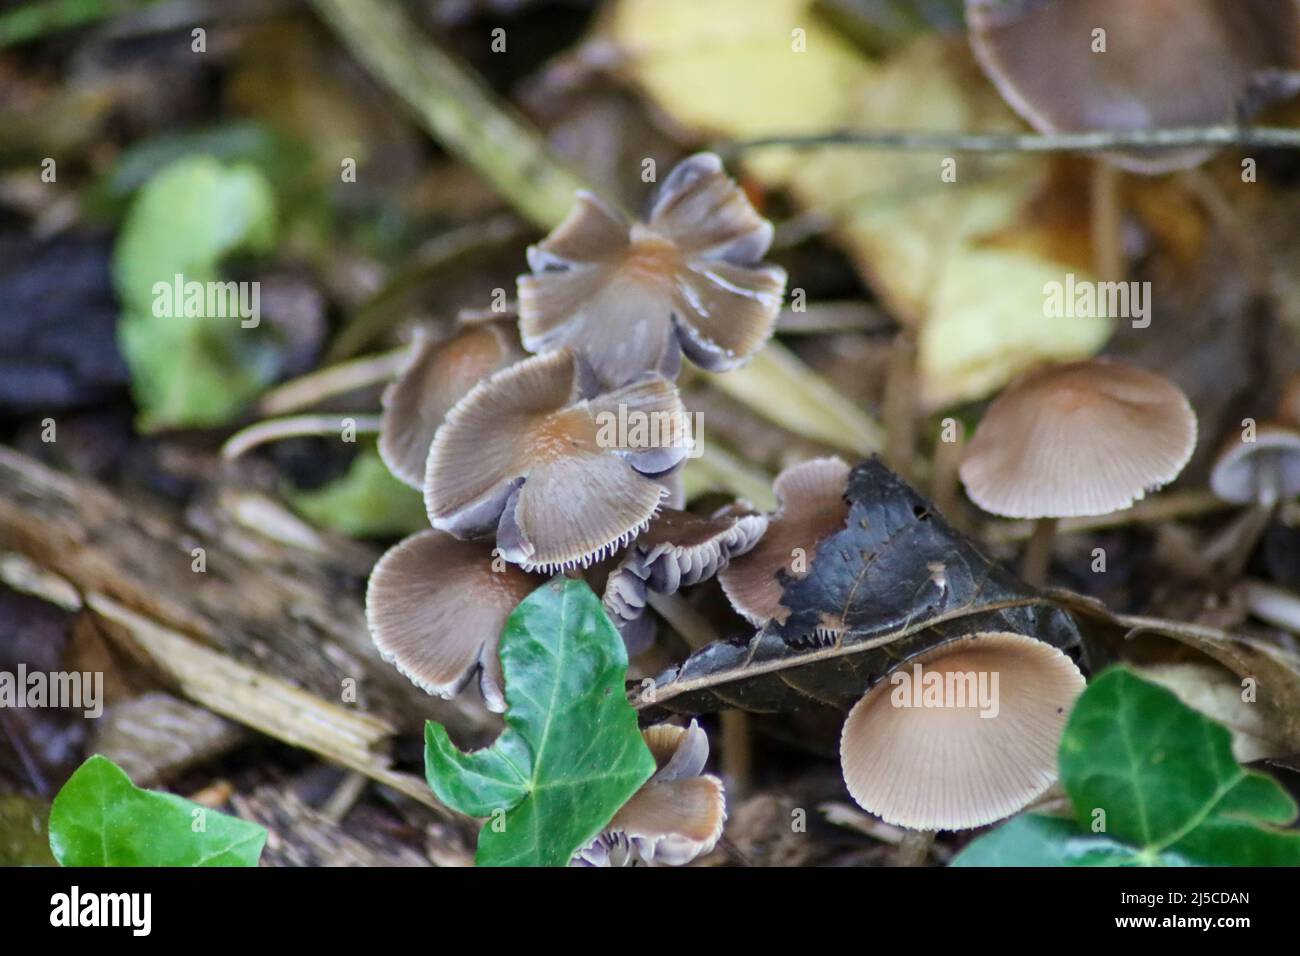 Psathyrella conopilus mushroom during autumn in the botanical garden of Capelle aan den IJssel Stock Photo